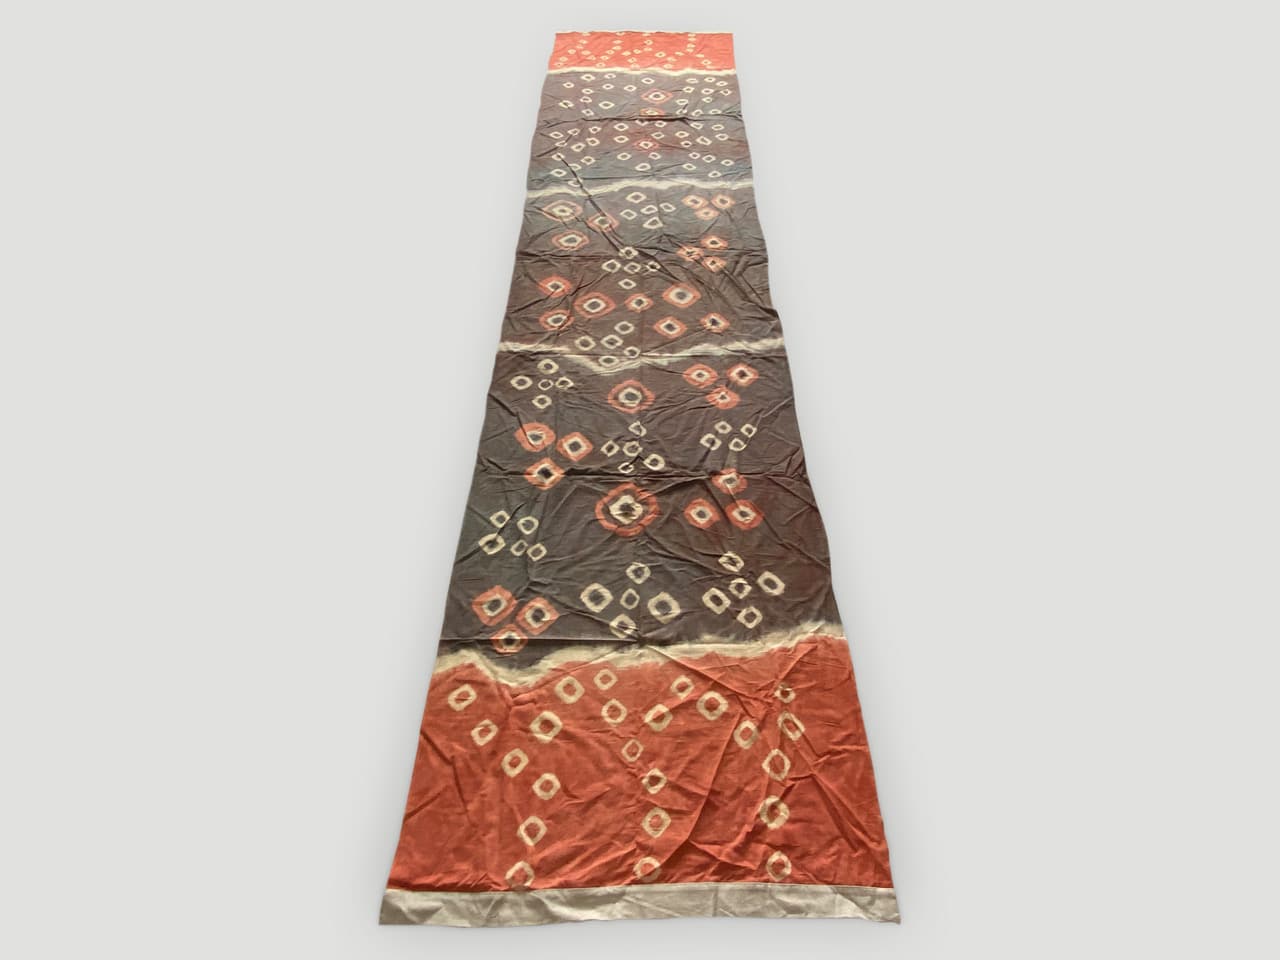 Toraja Land textile